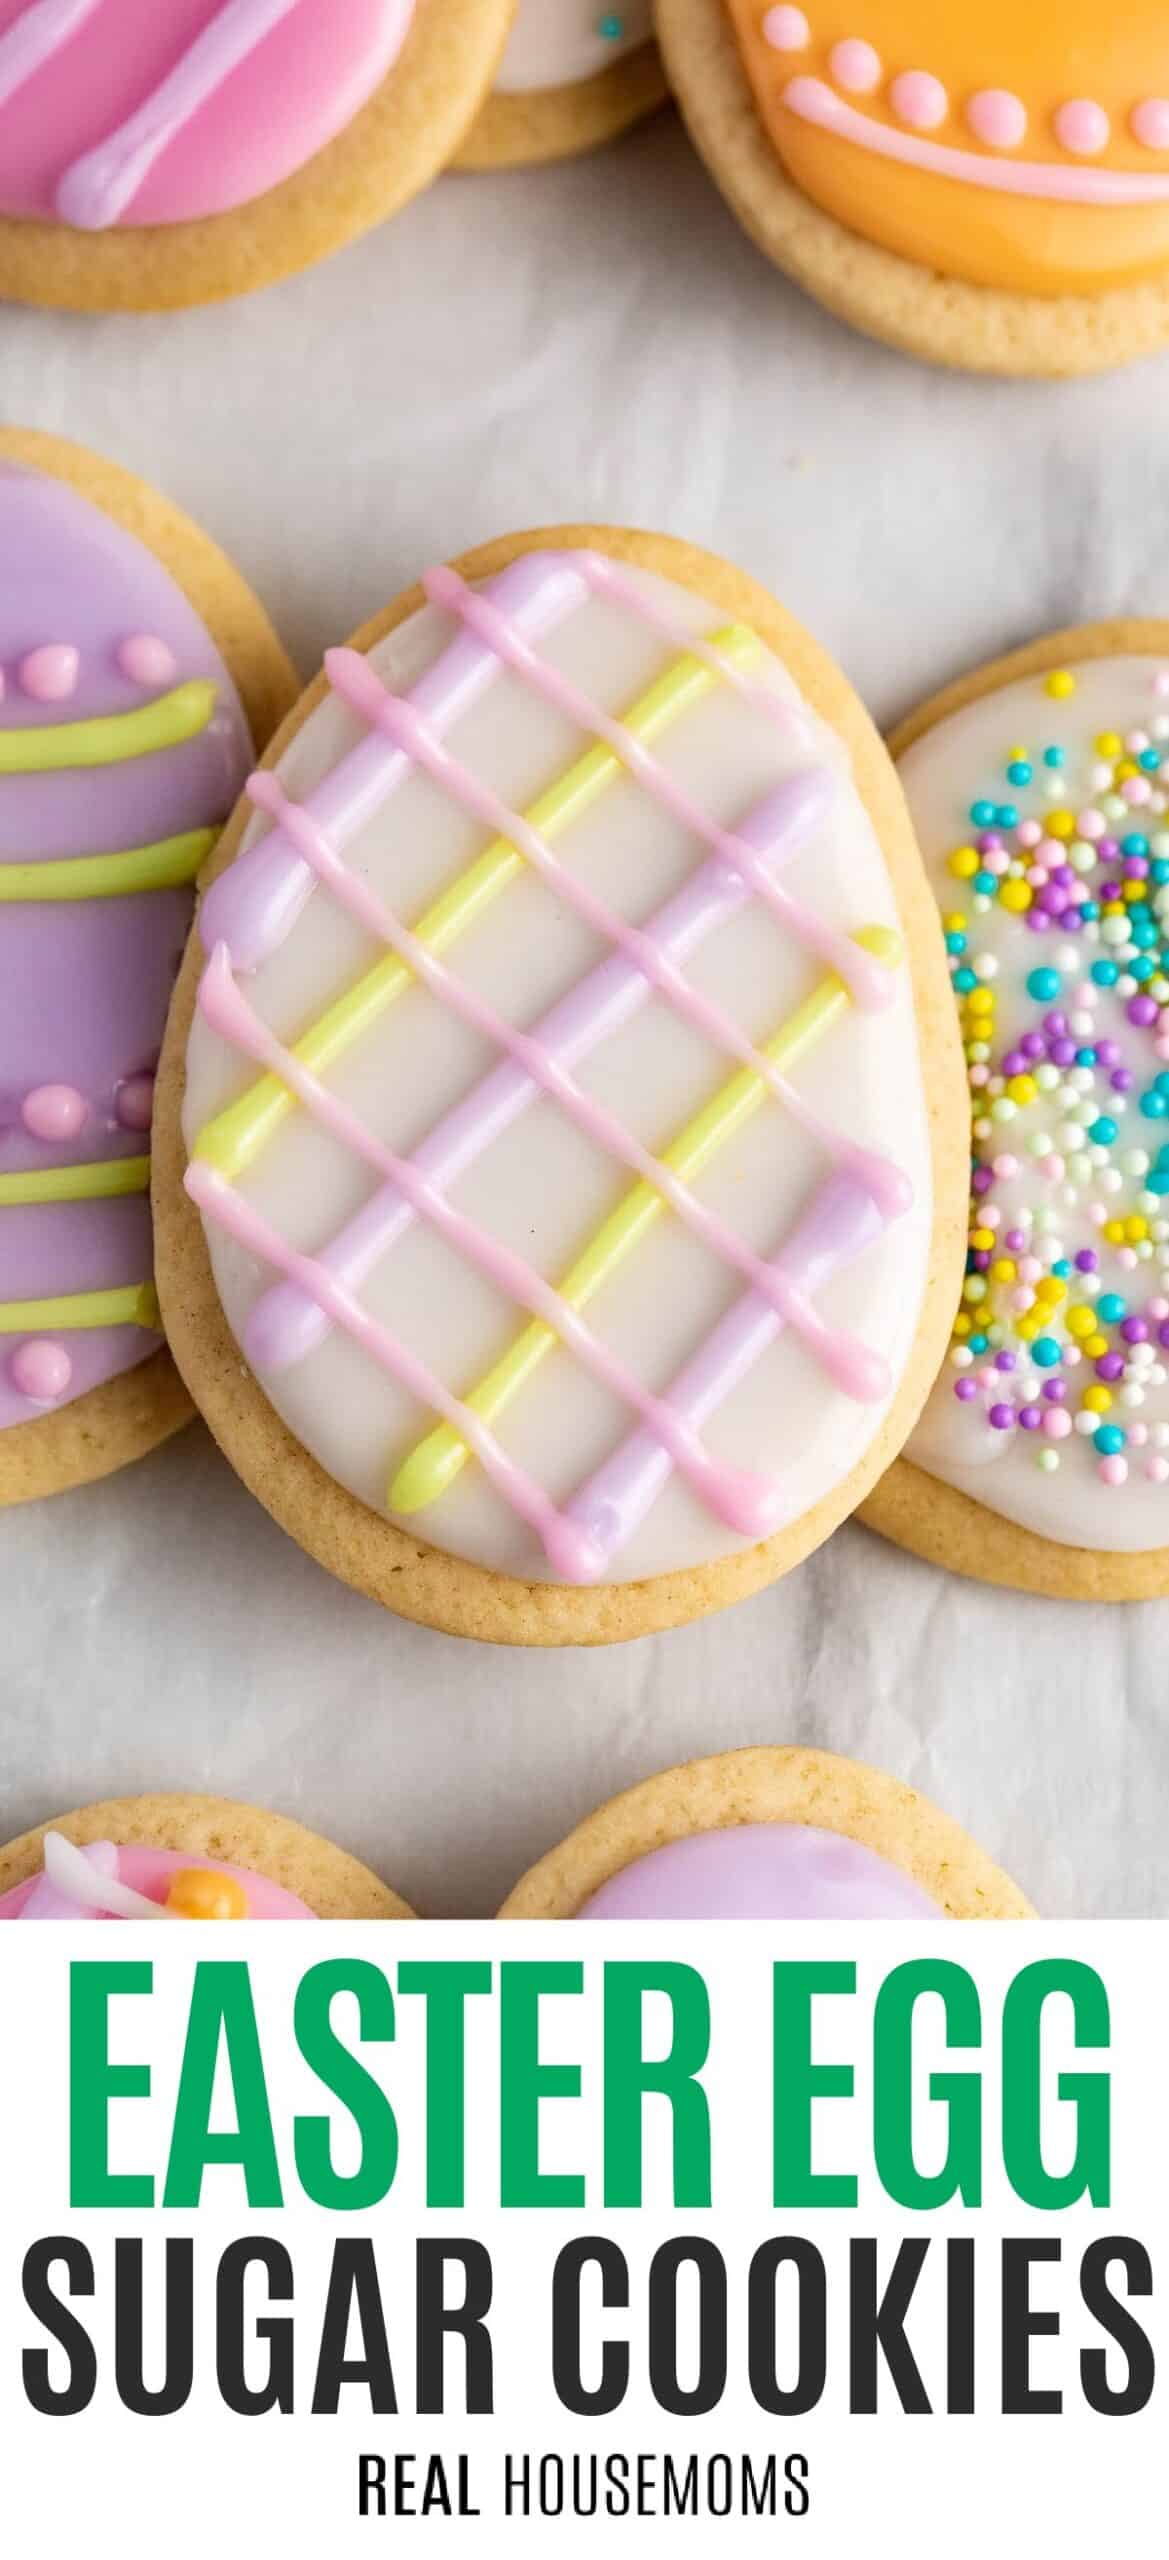 https://realhousemoms.com/wp-content/uploads/Easter-Egg-Sugar-Cookies-HERO-scaled.jpg